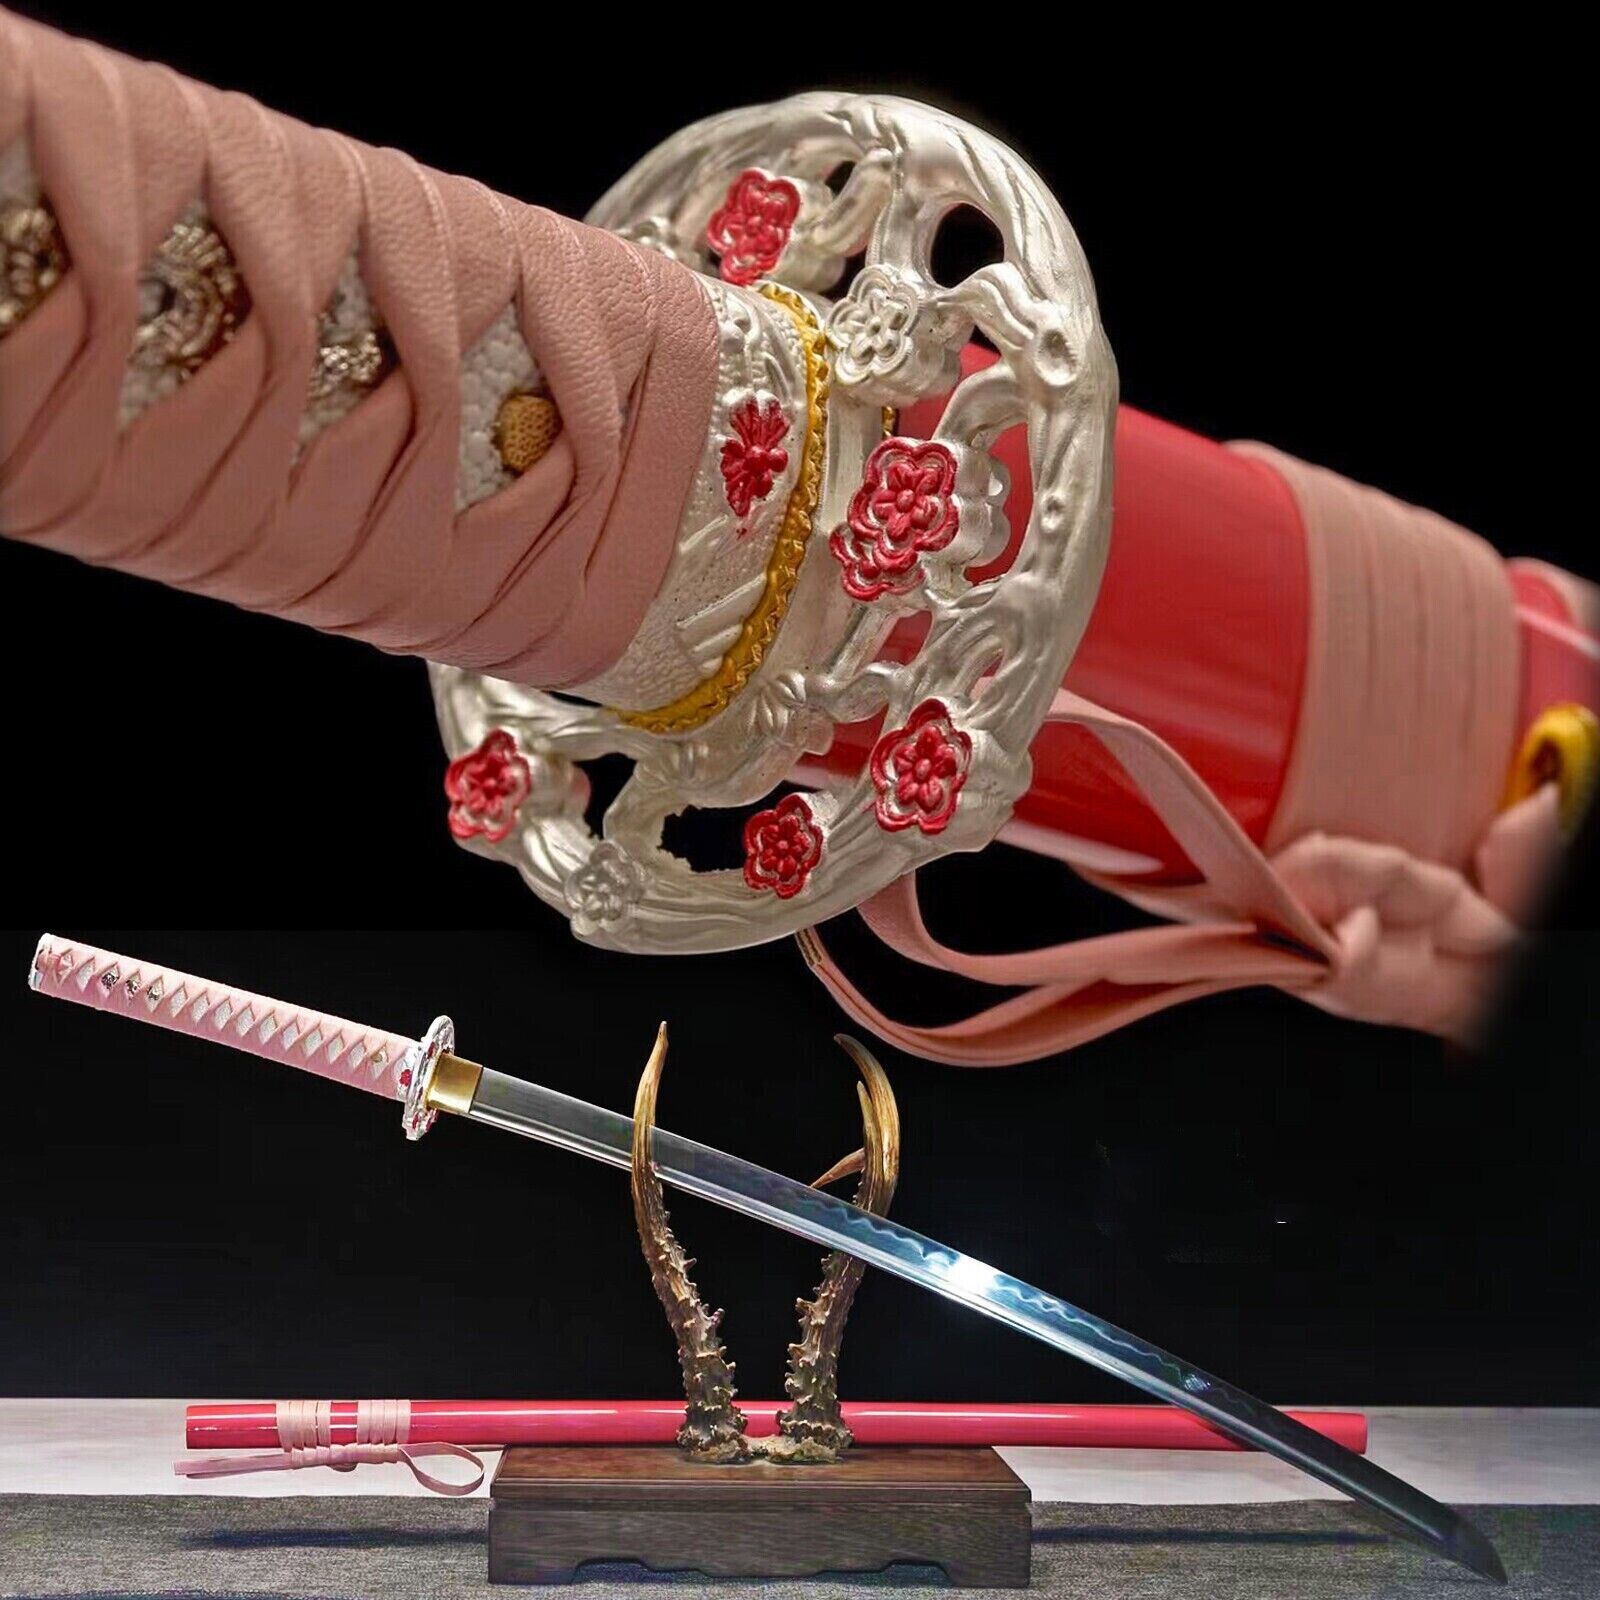 Sakura Pink Katana Clay Tempered 1095 Steel Japanese Samurai Sharp Lady Sword